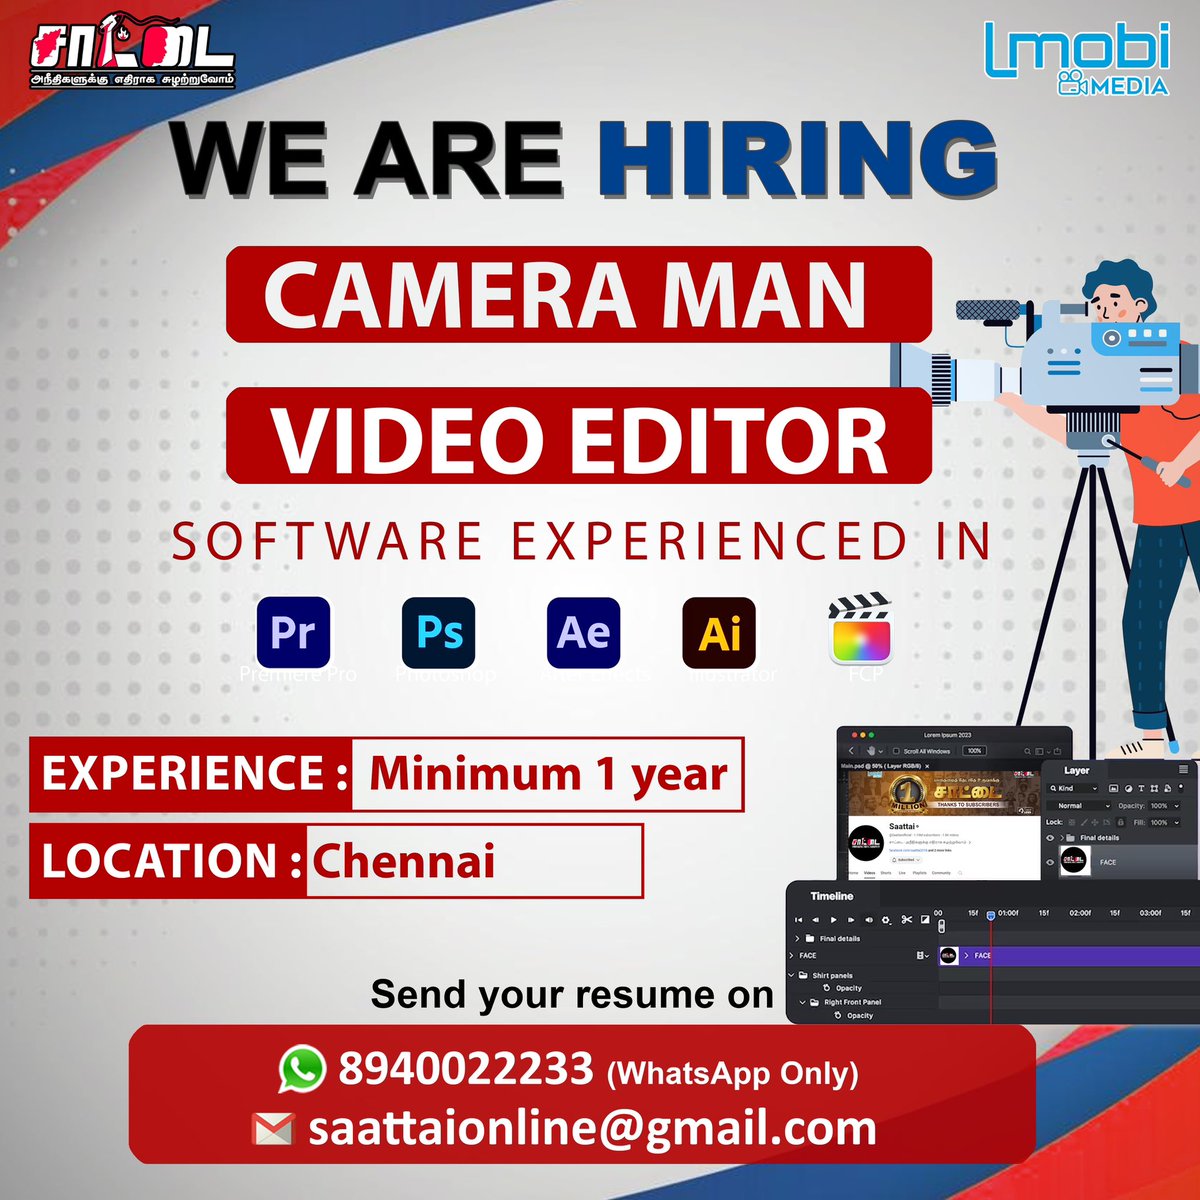 We are Hiring ! 

#jobvacancy #cameraman #editor #youtube #saattai #sattaiduraimurugan 

@SaattaiOnline